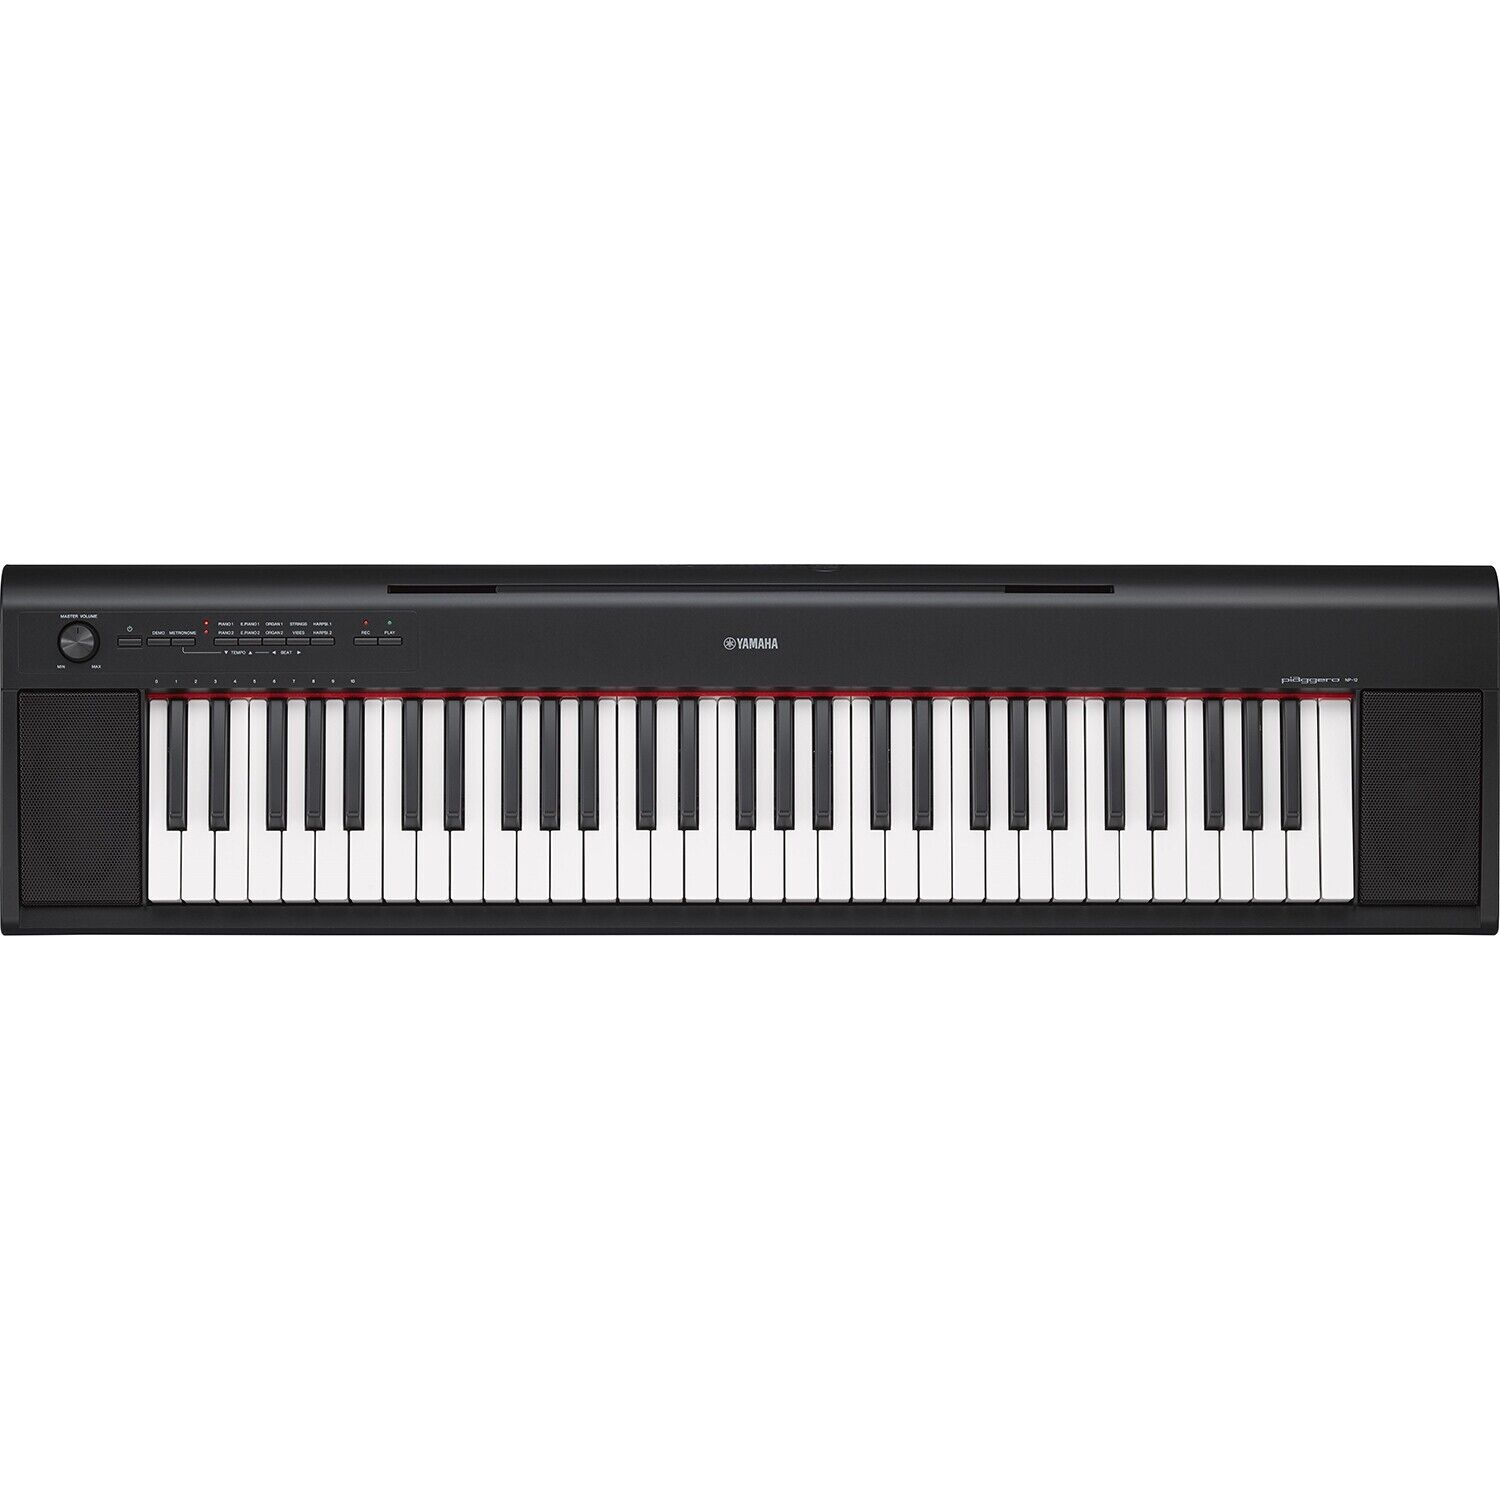 Yamaha NP-12 61-Key Piaggero Portable Keyboard - Black for sale online |  eBay